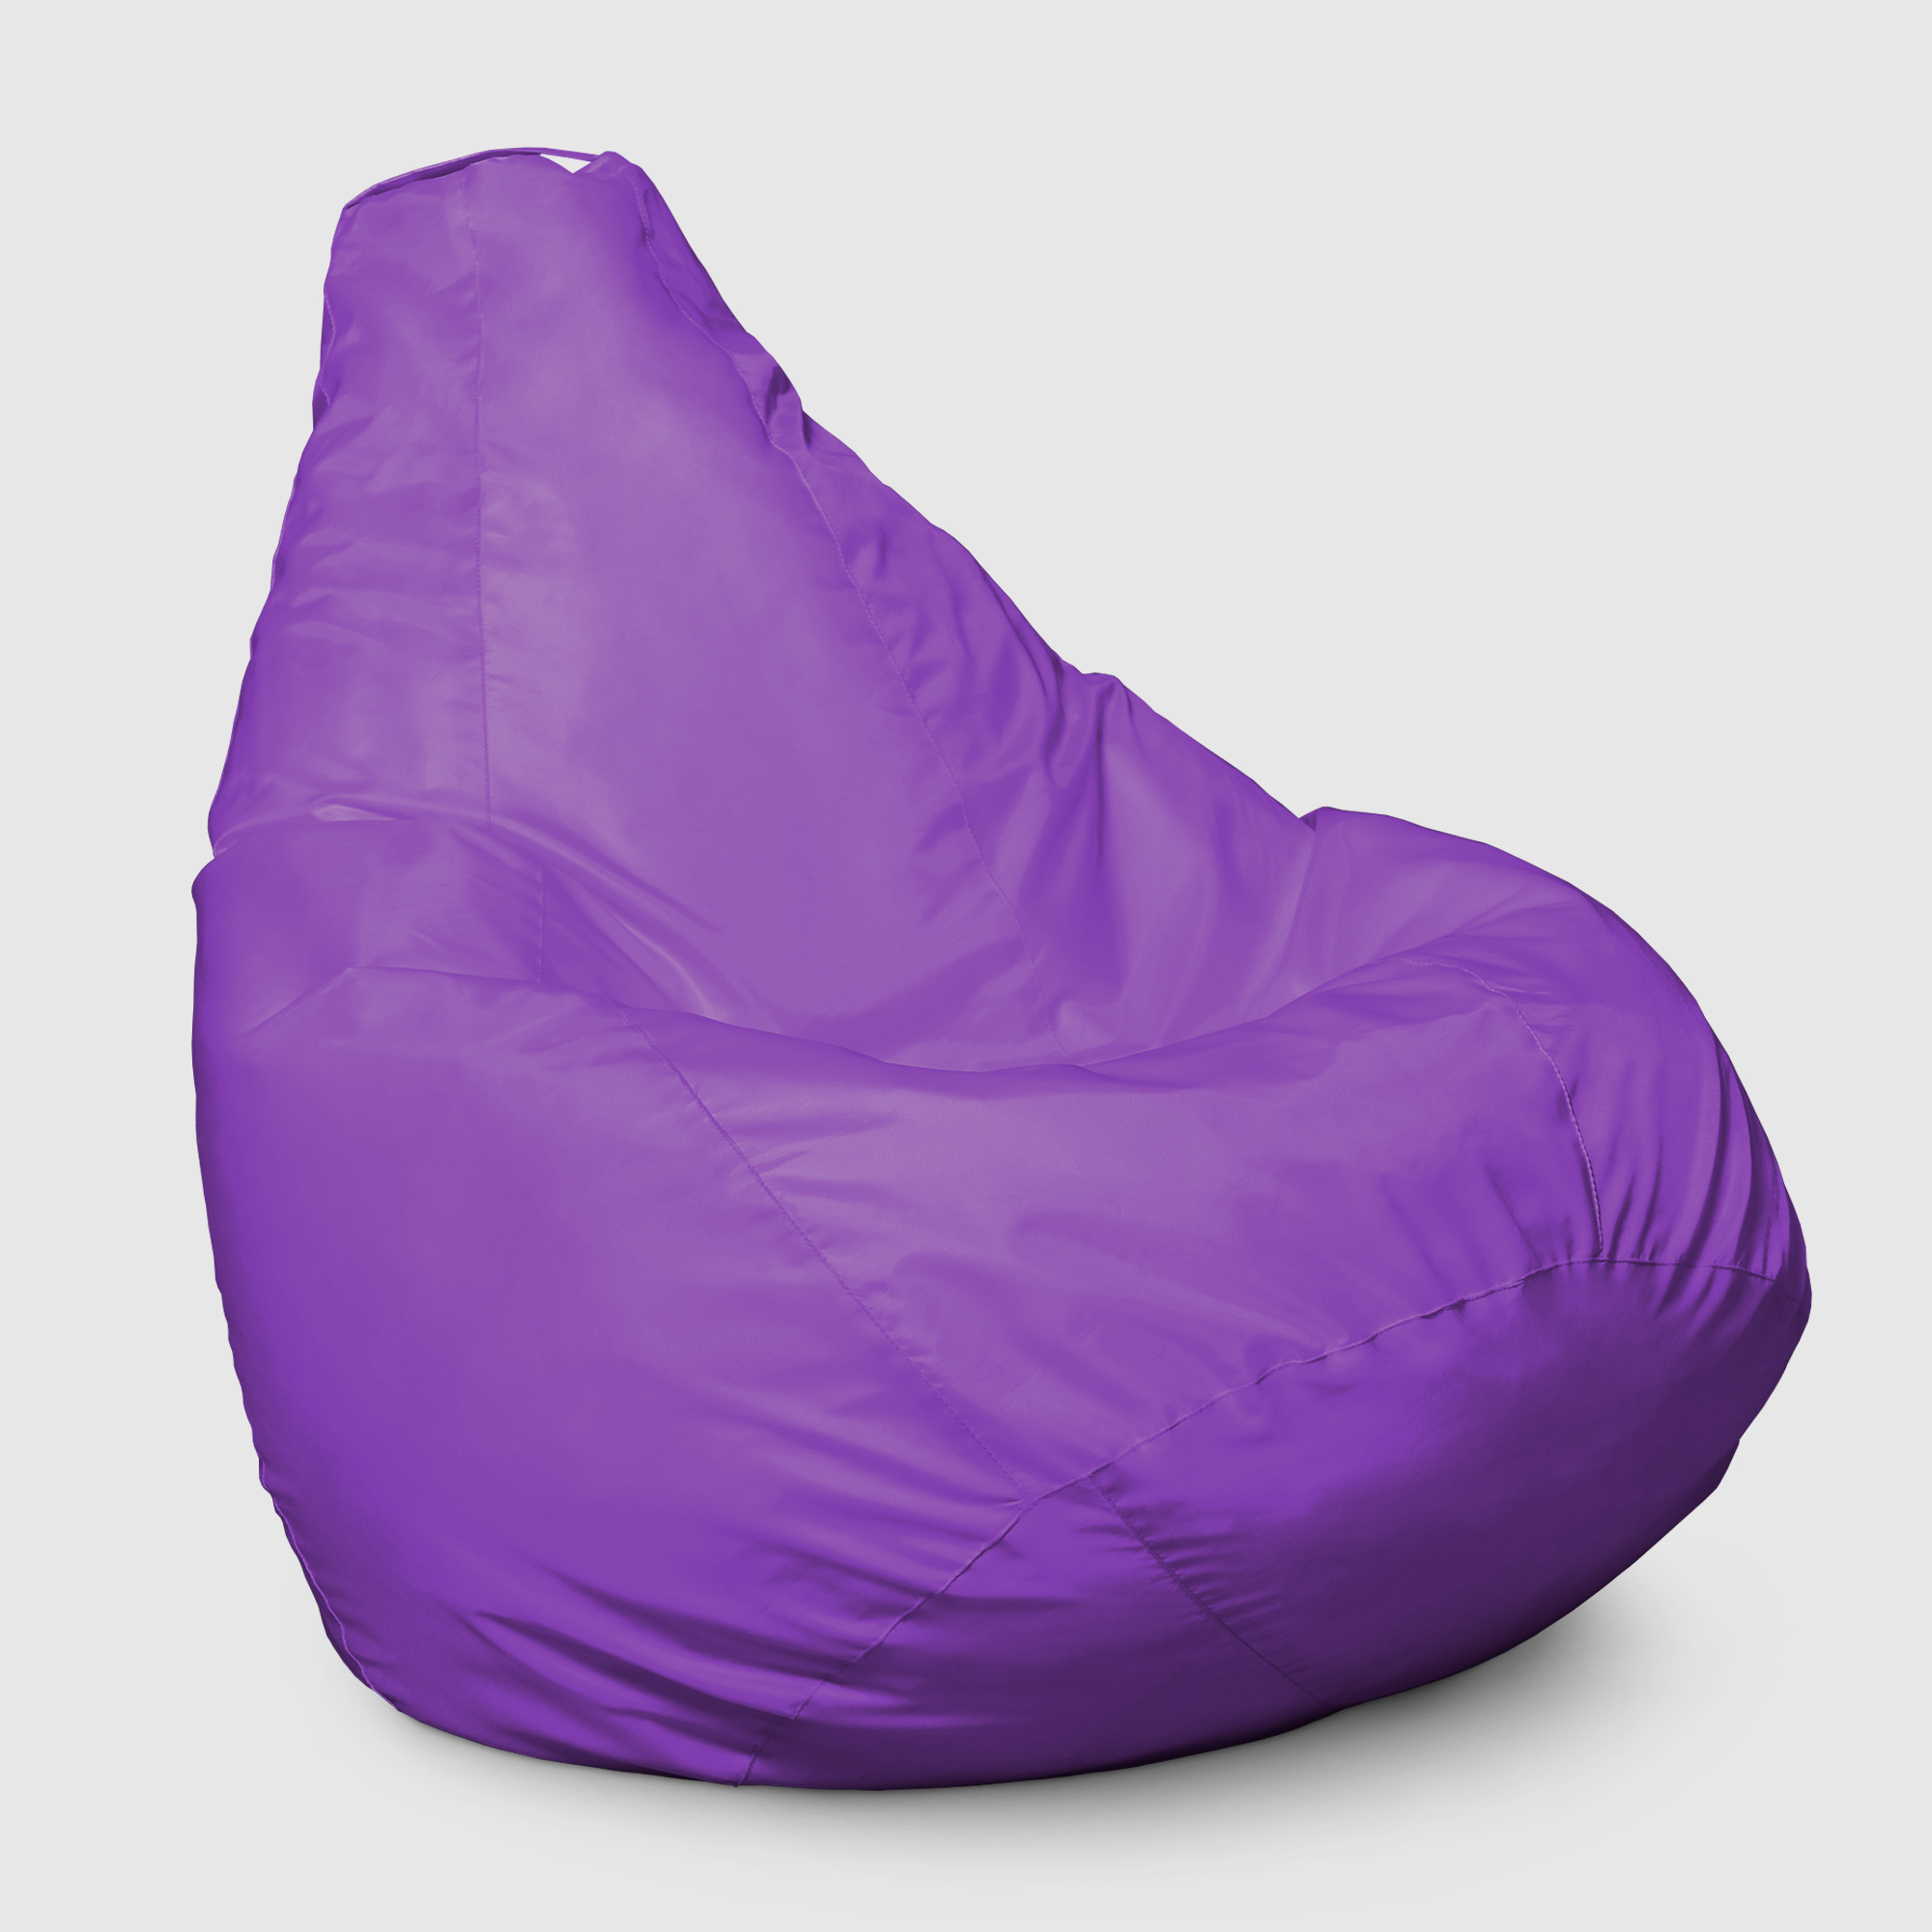 Кресло мешок Dreambag Меган xl фиолетовое 85х85х125 см кресло мешок dreambag меган xl черное 85х85х125 см